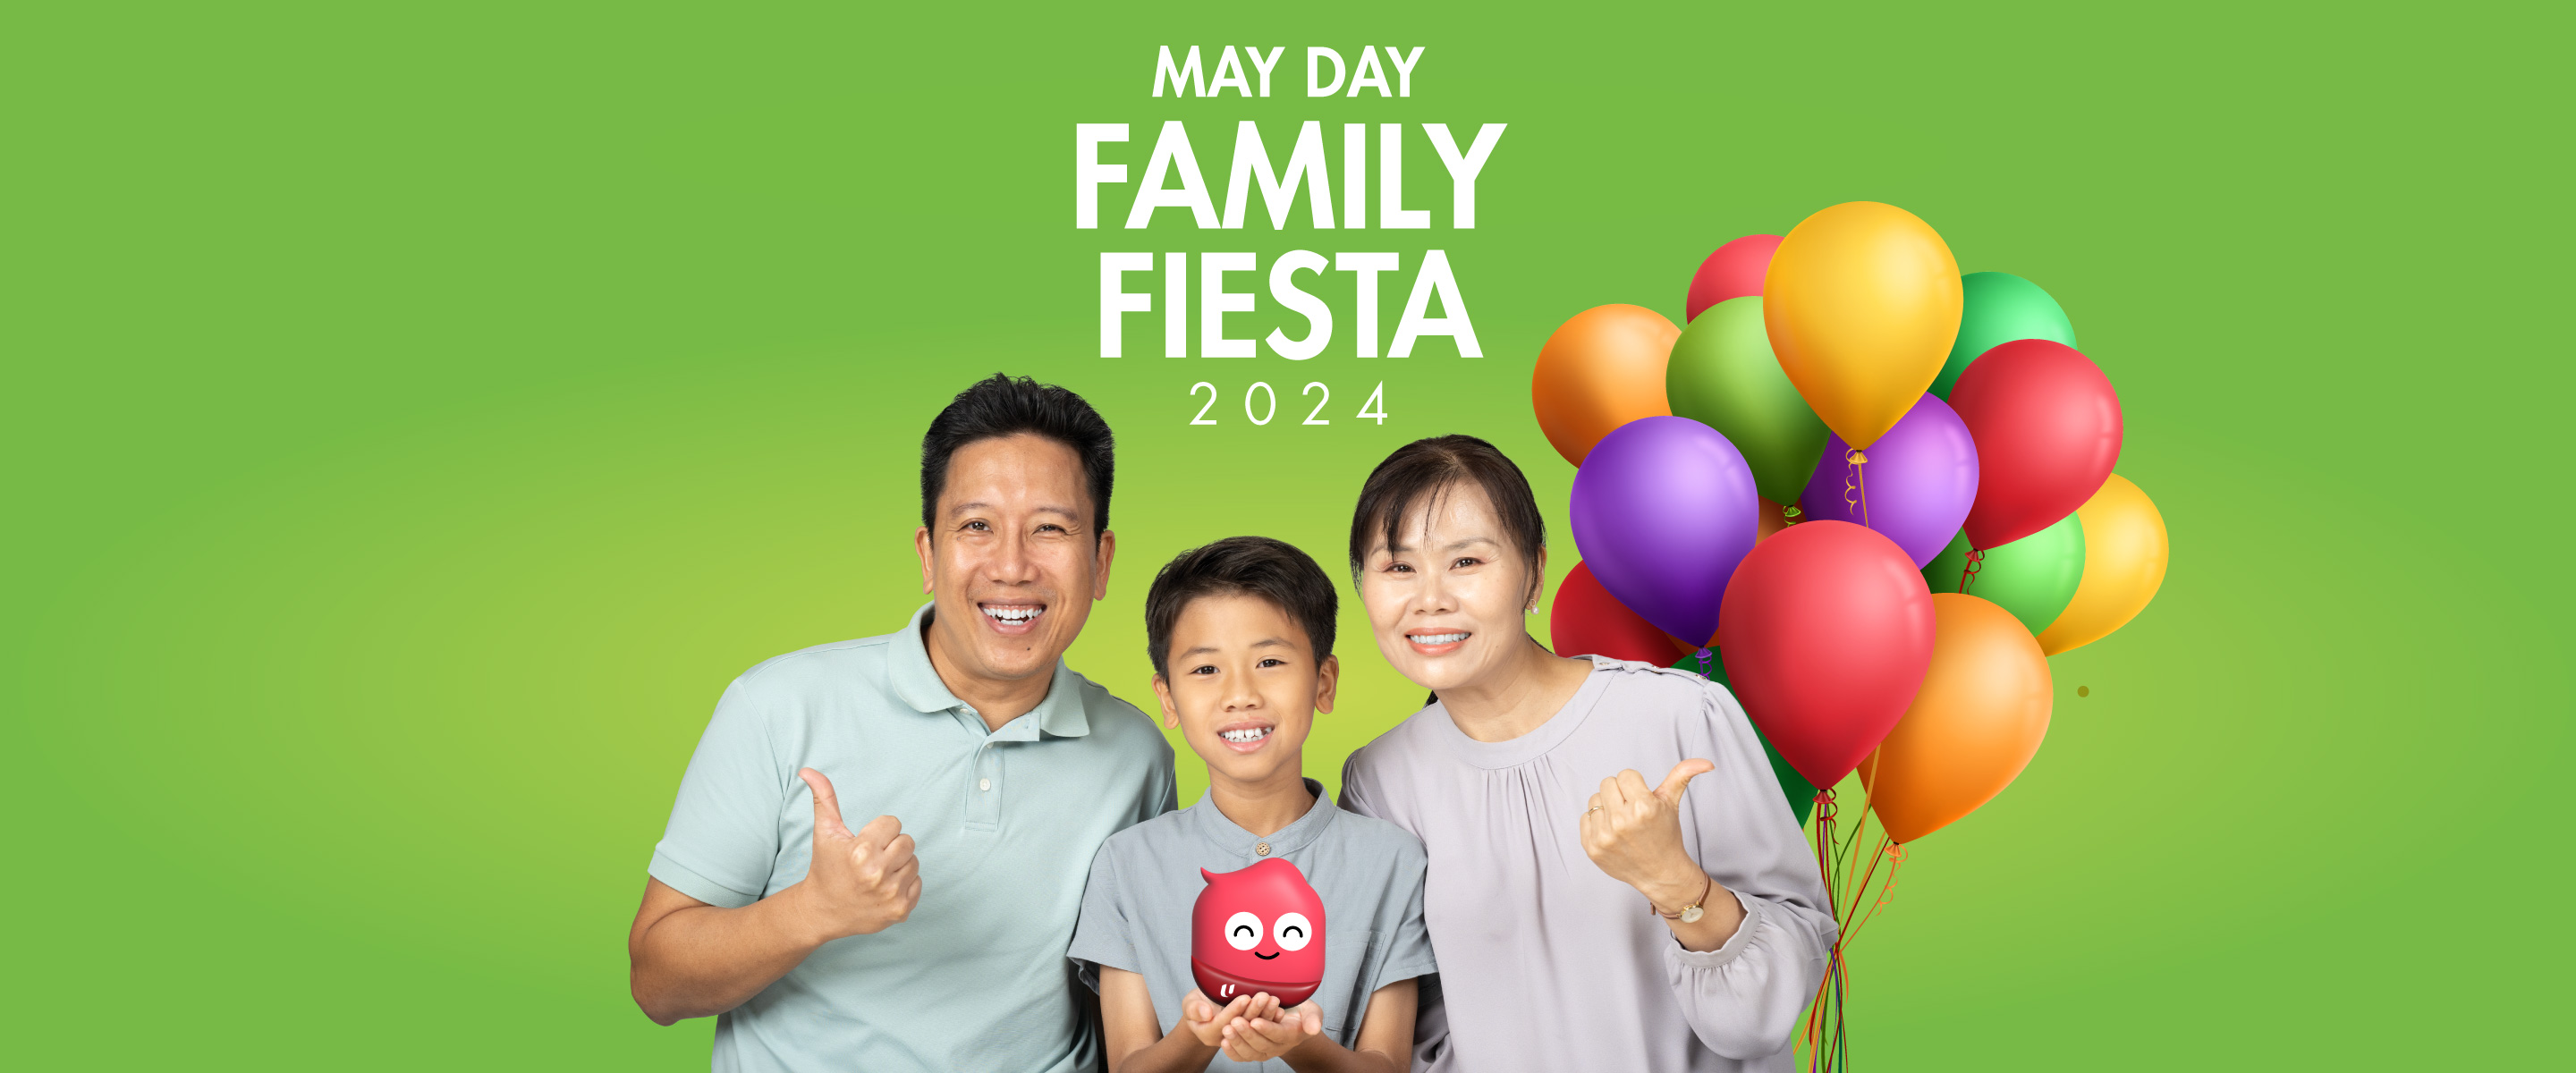 May-Day-Family-Fiesta-2024-KV.jpg